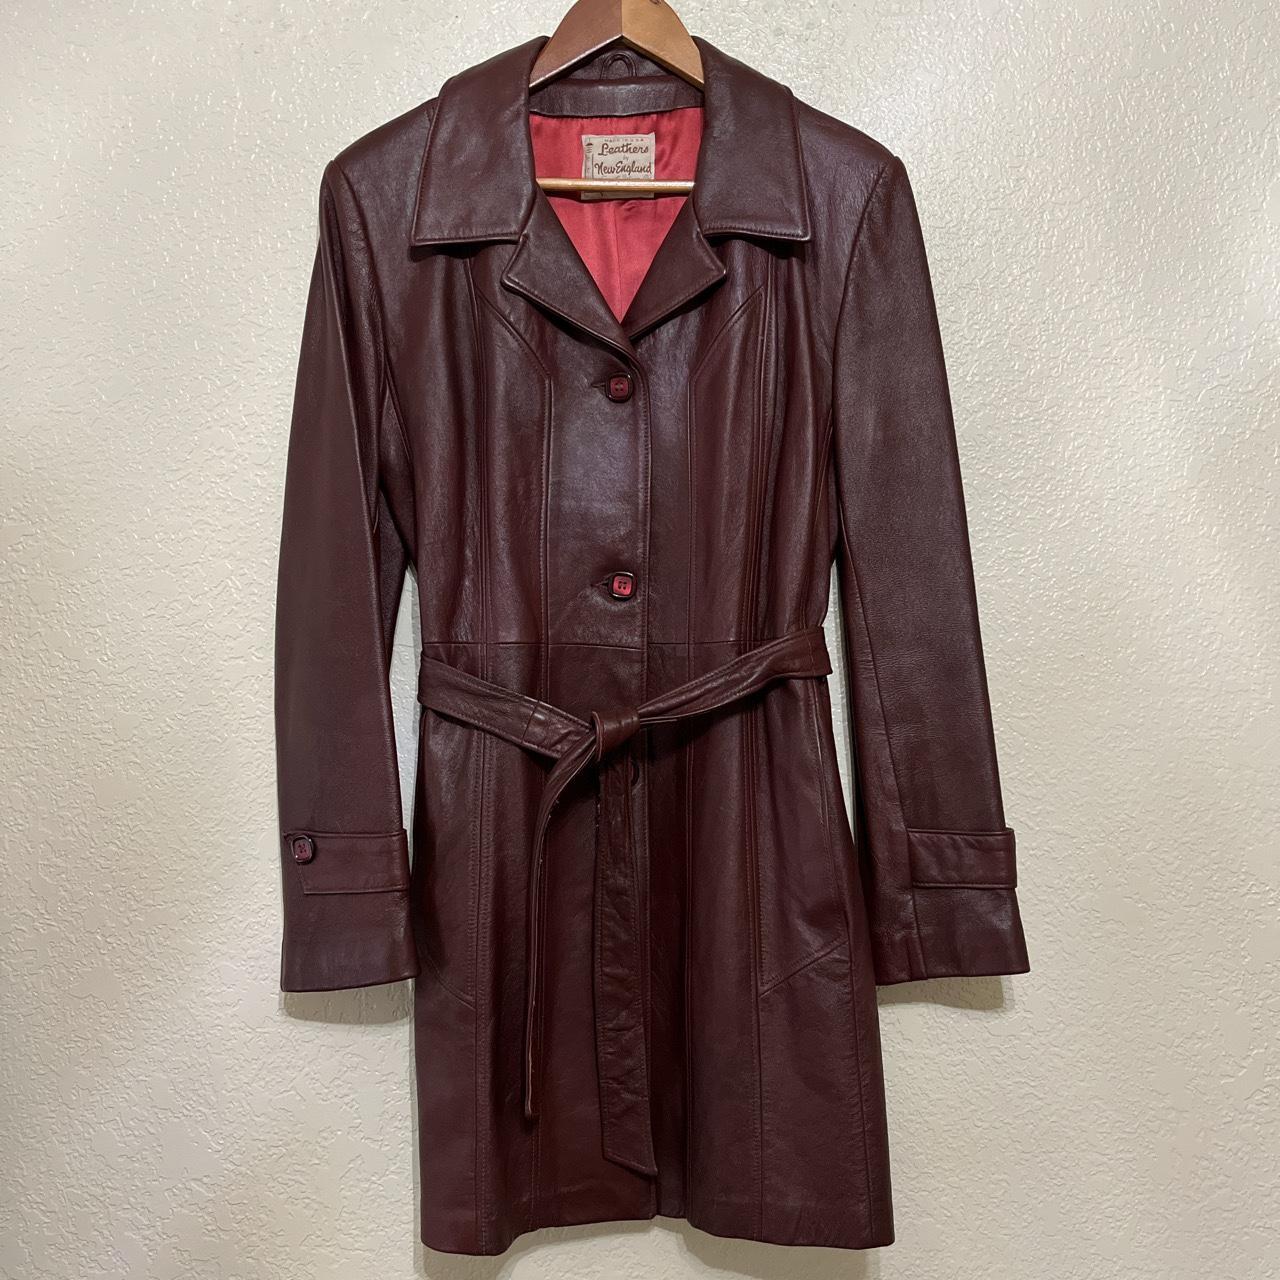 Vintage Women’s Leather Trench Coat Jacket Size... - Depop